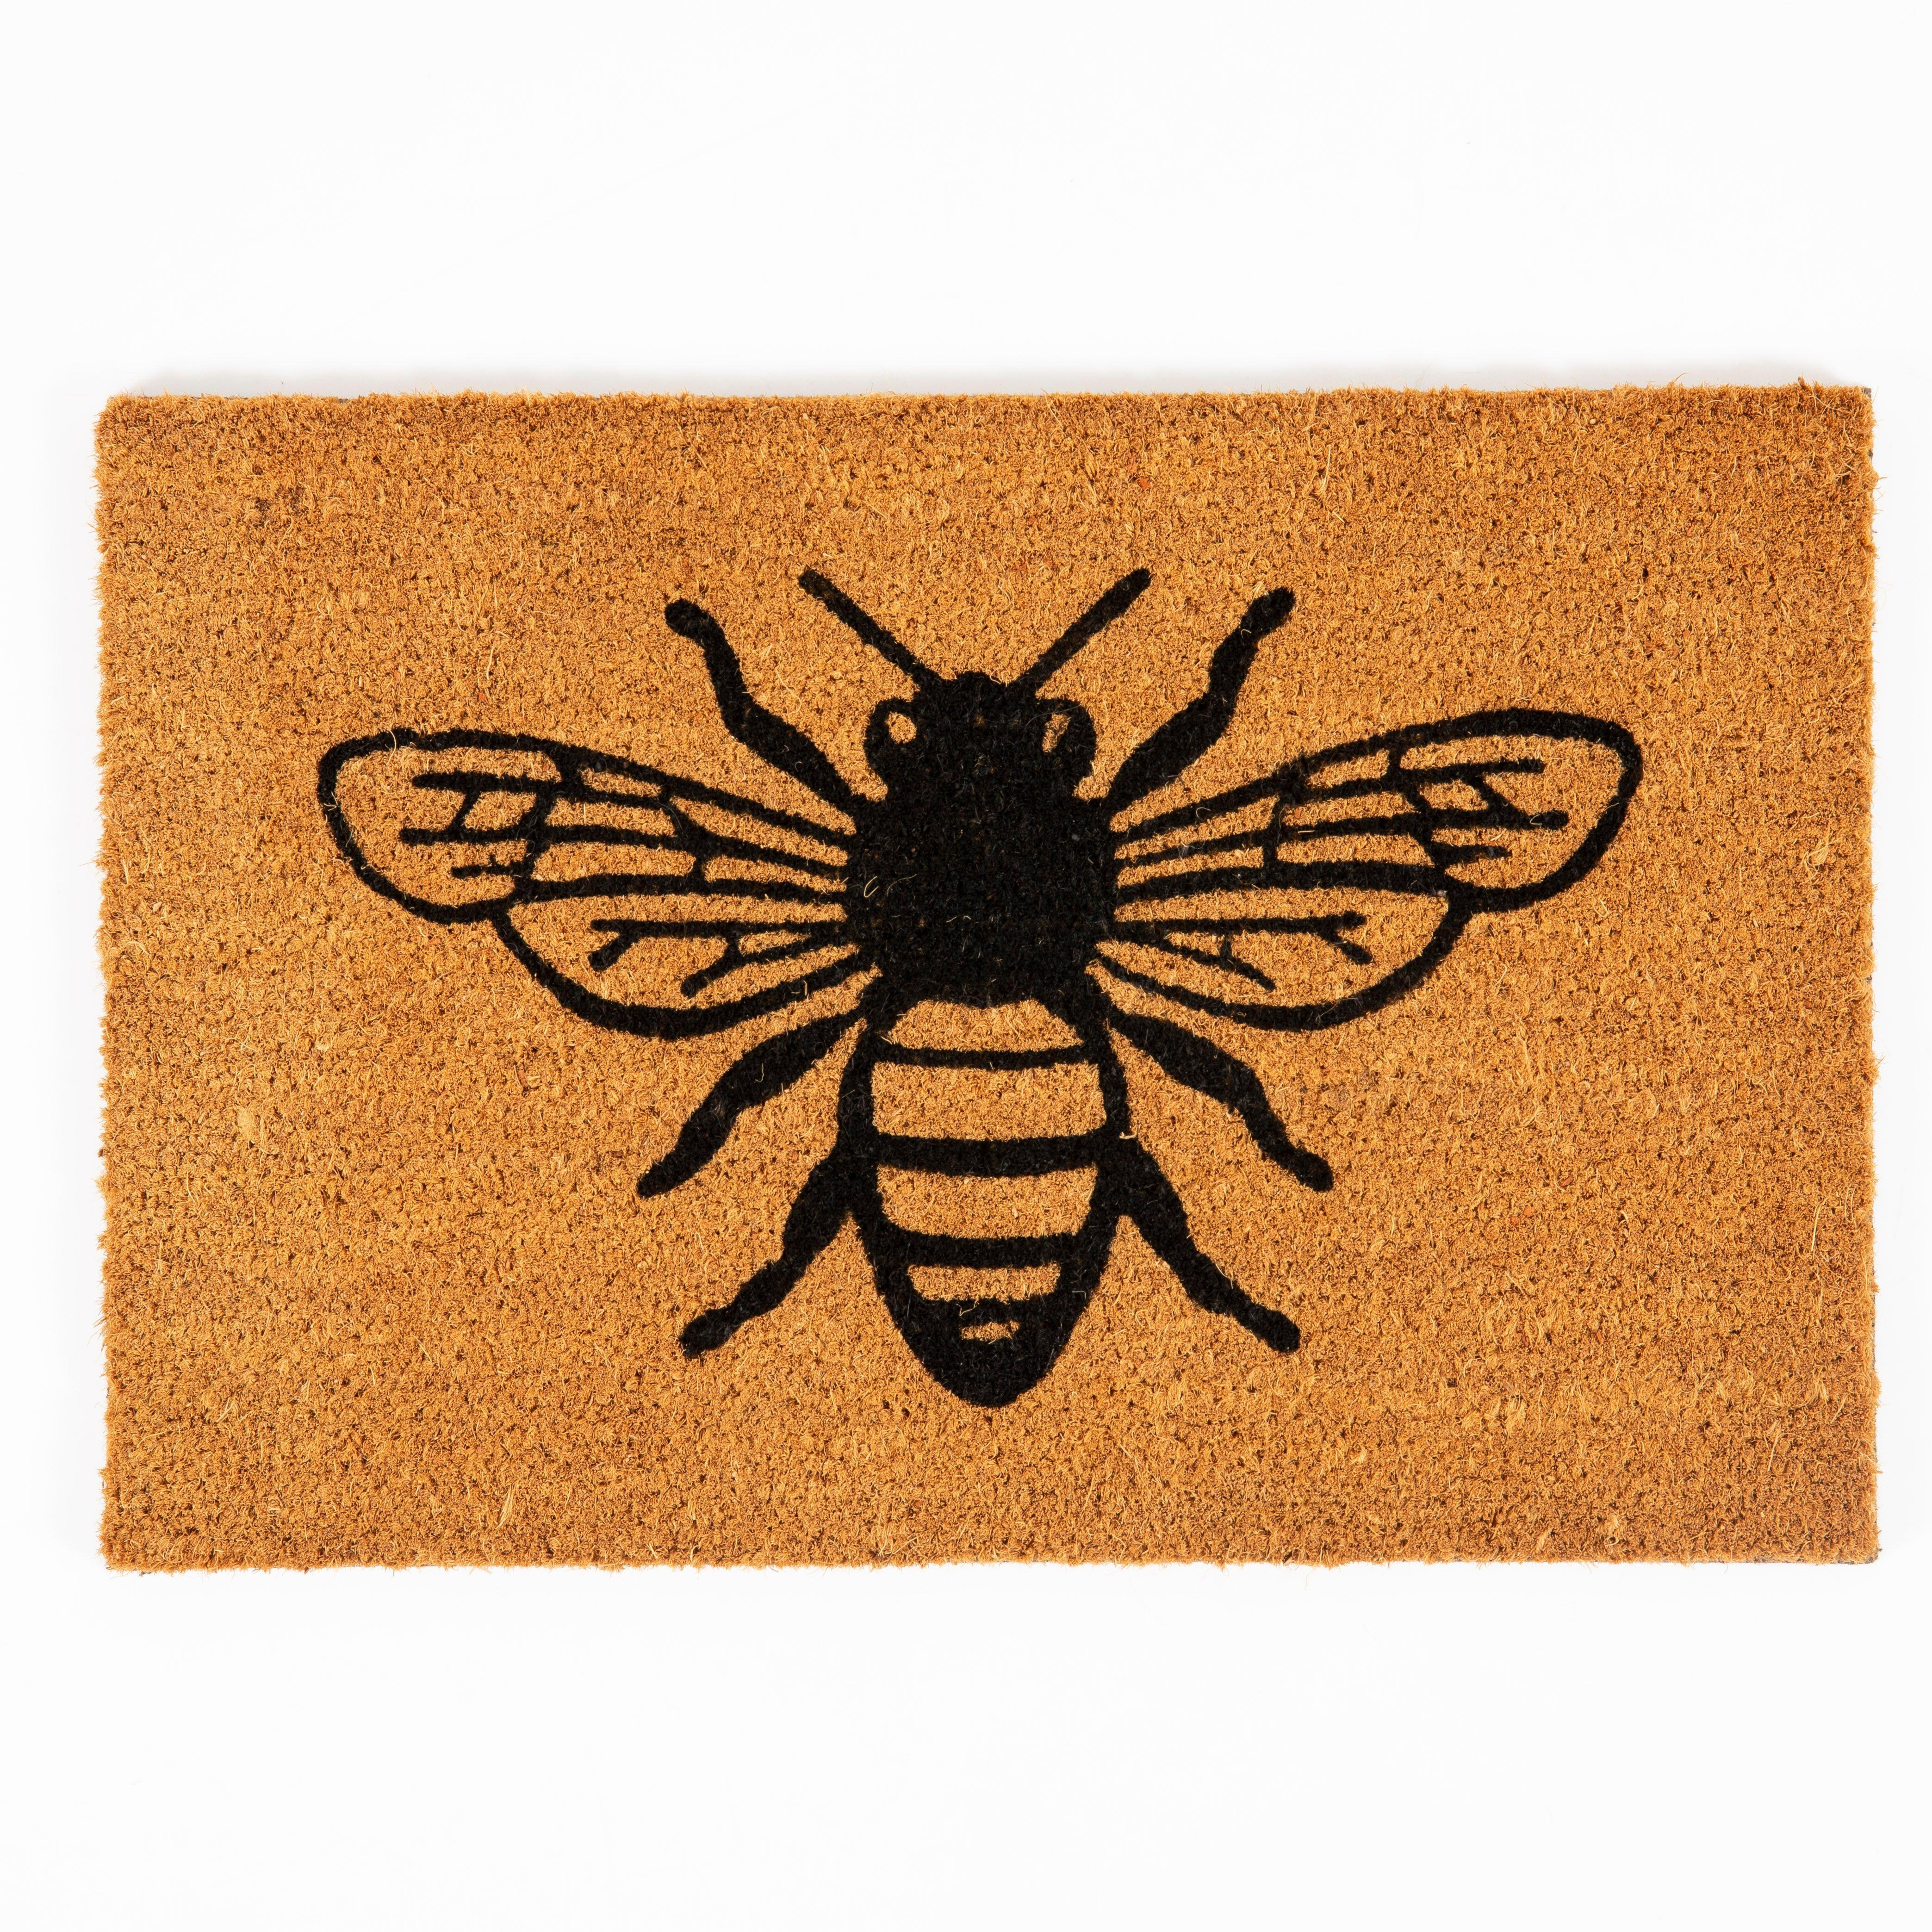 Astley Monochrome Bee Natural Coir Mat - image 1